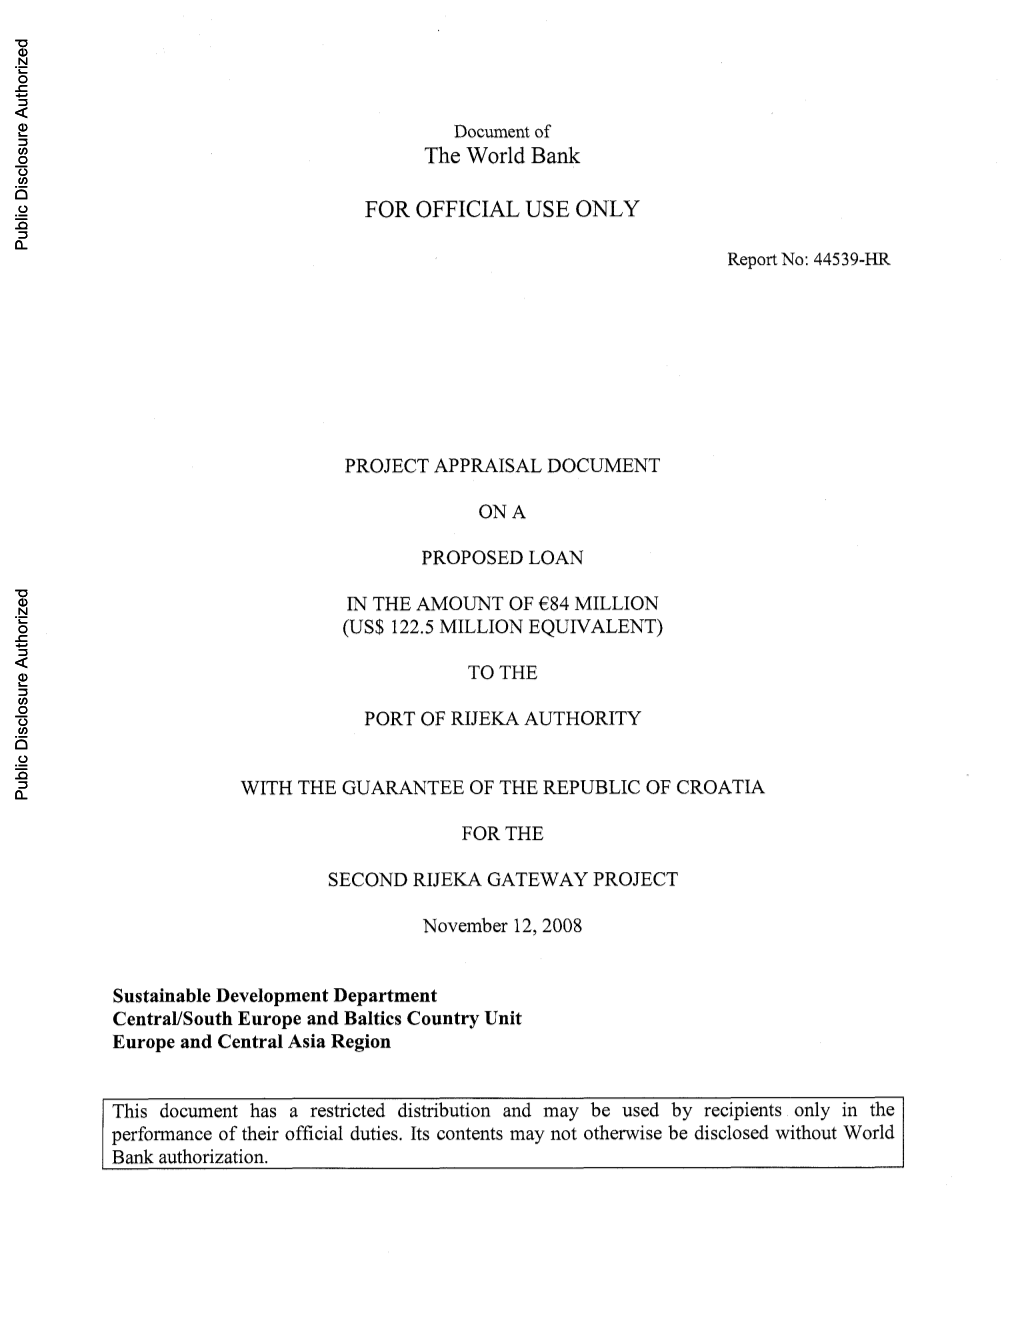 CROATIA Public Disclosure Authorized